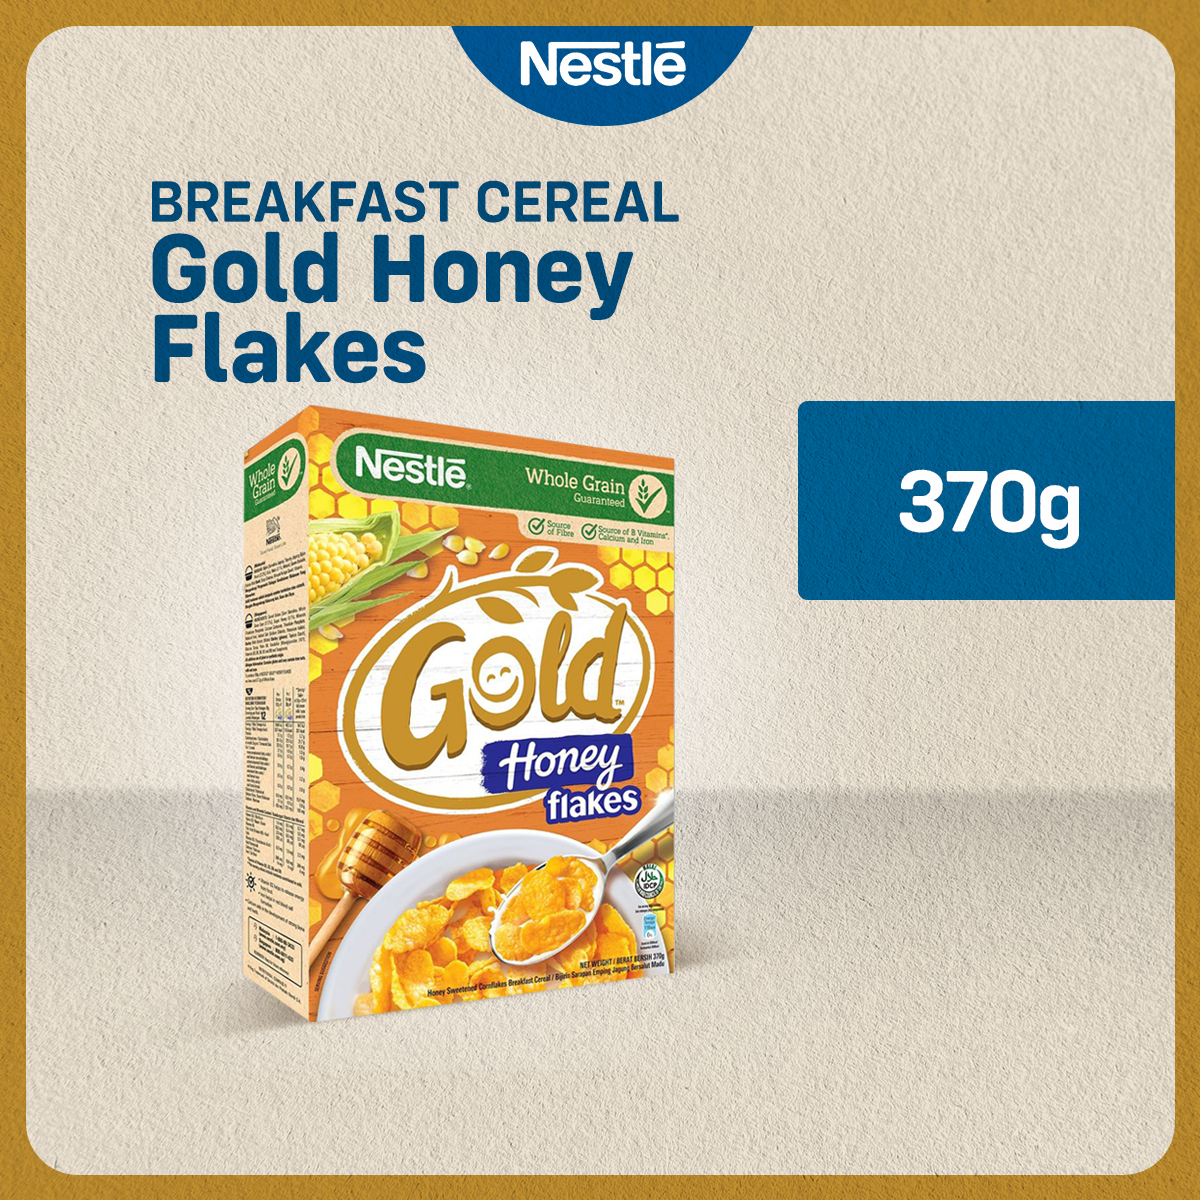 Shop Original Gold Edible Flakes online